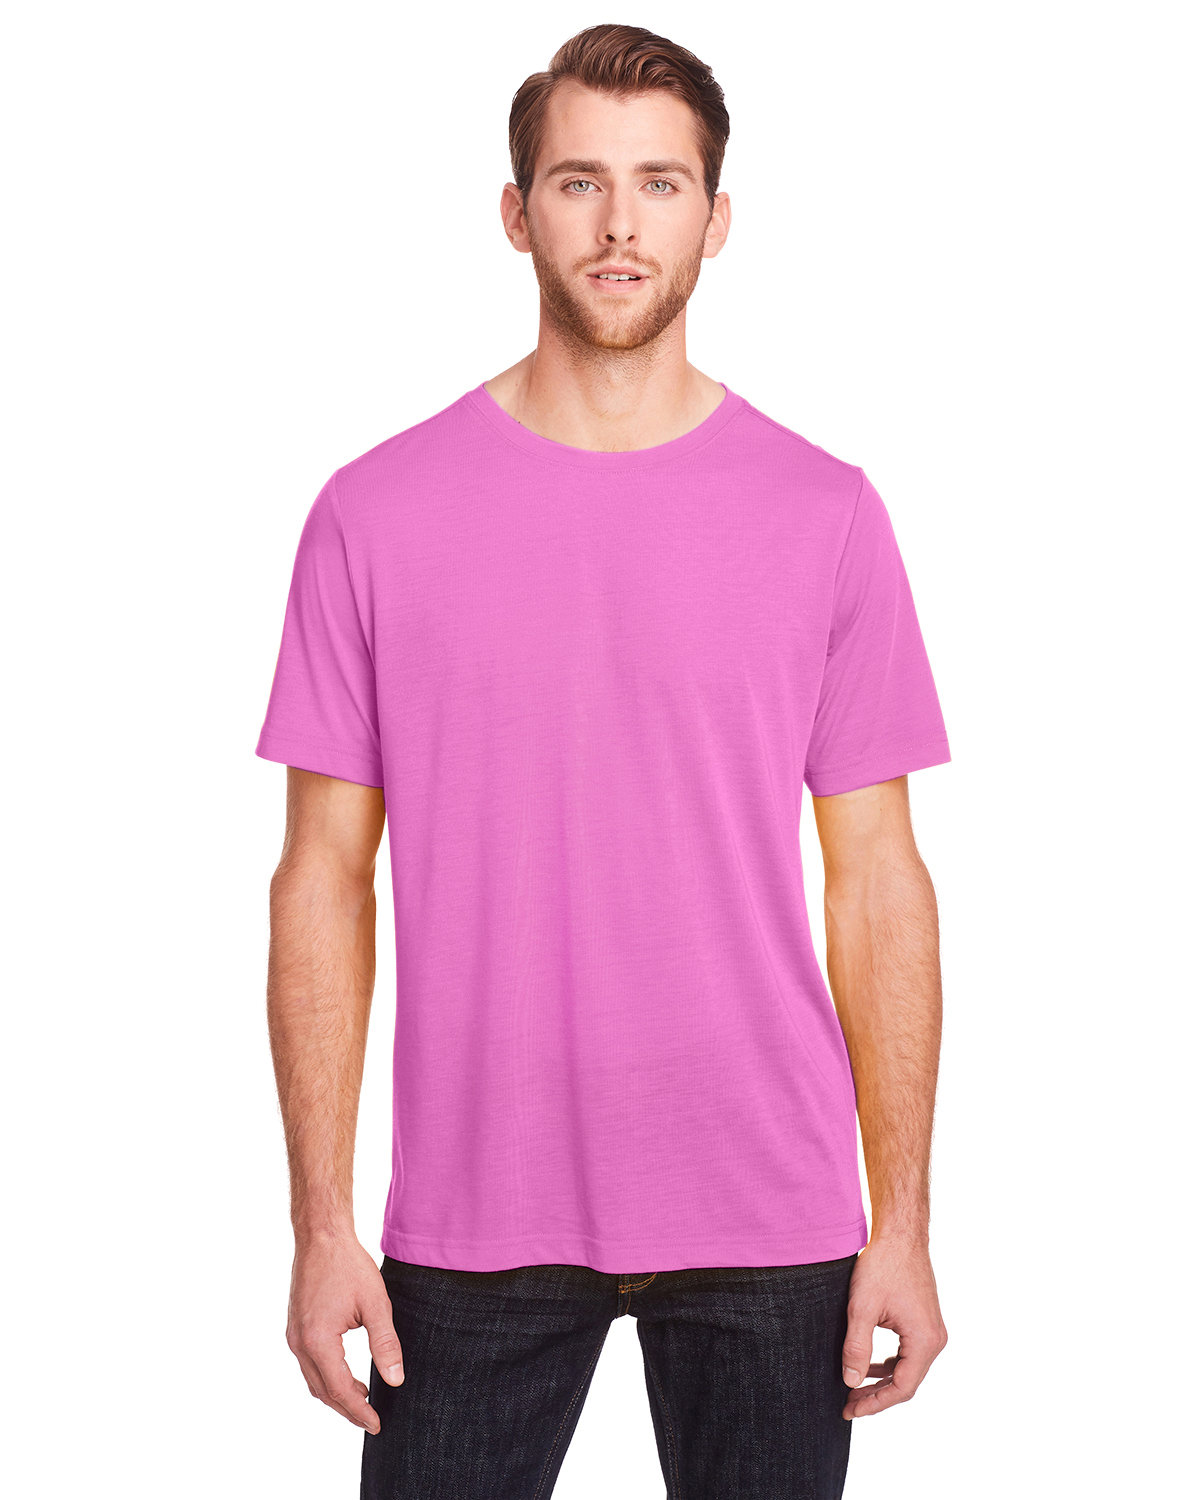 CORE365 Adult Fusion ChromaSoft Performance T-Shirt CHARITY PINK 